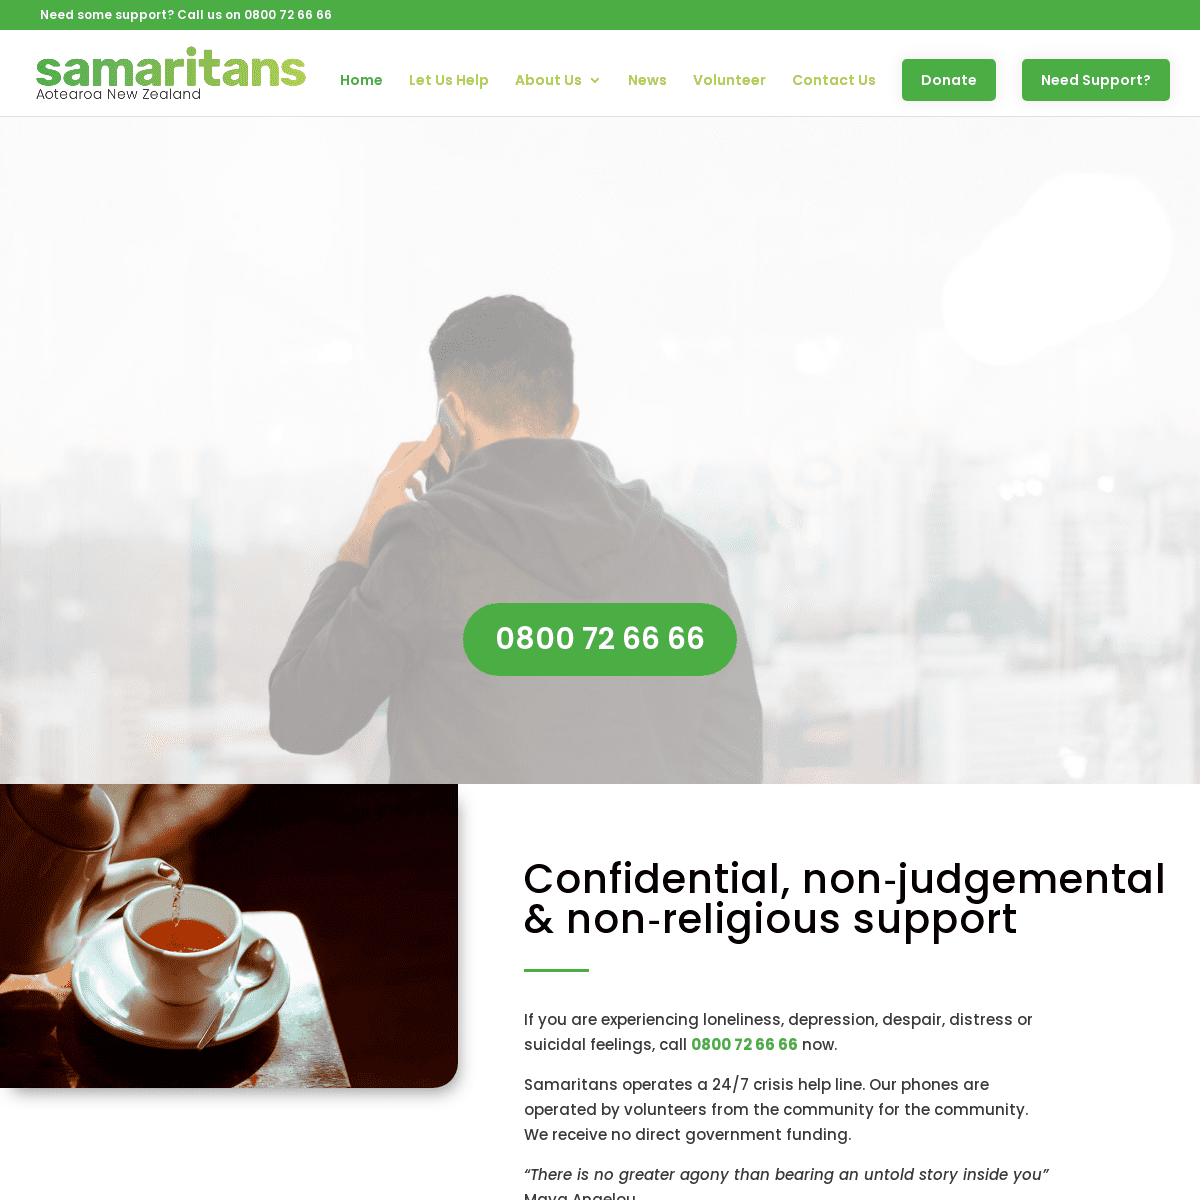 A complete backup of samaritans.org.nz